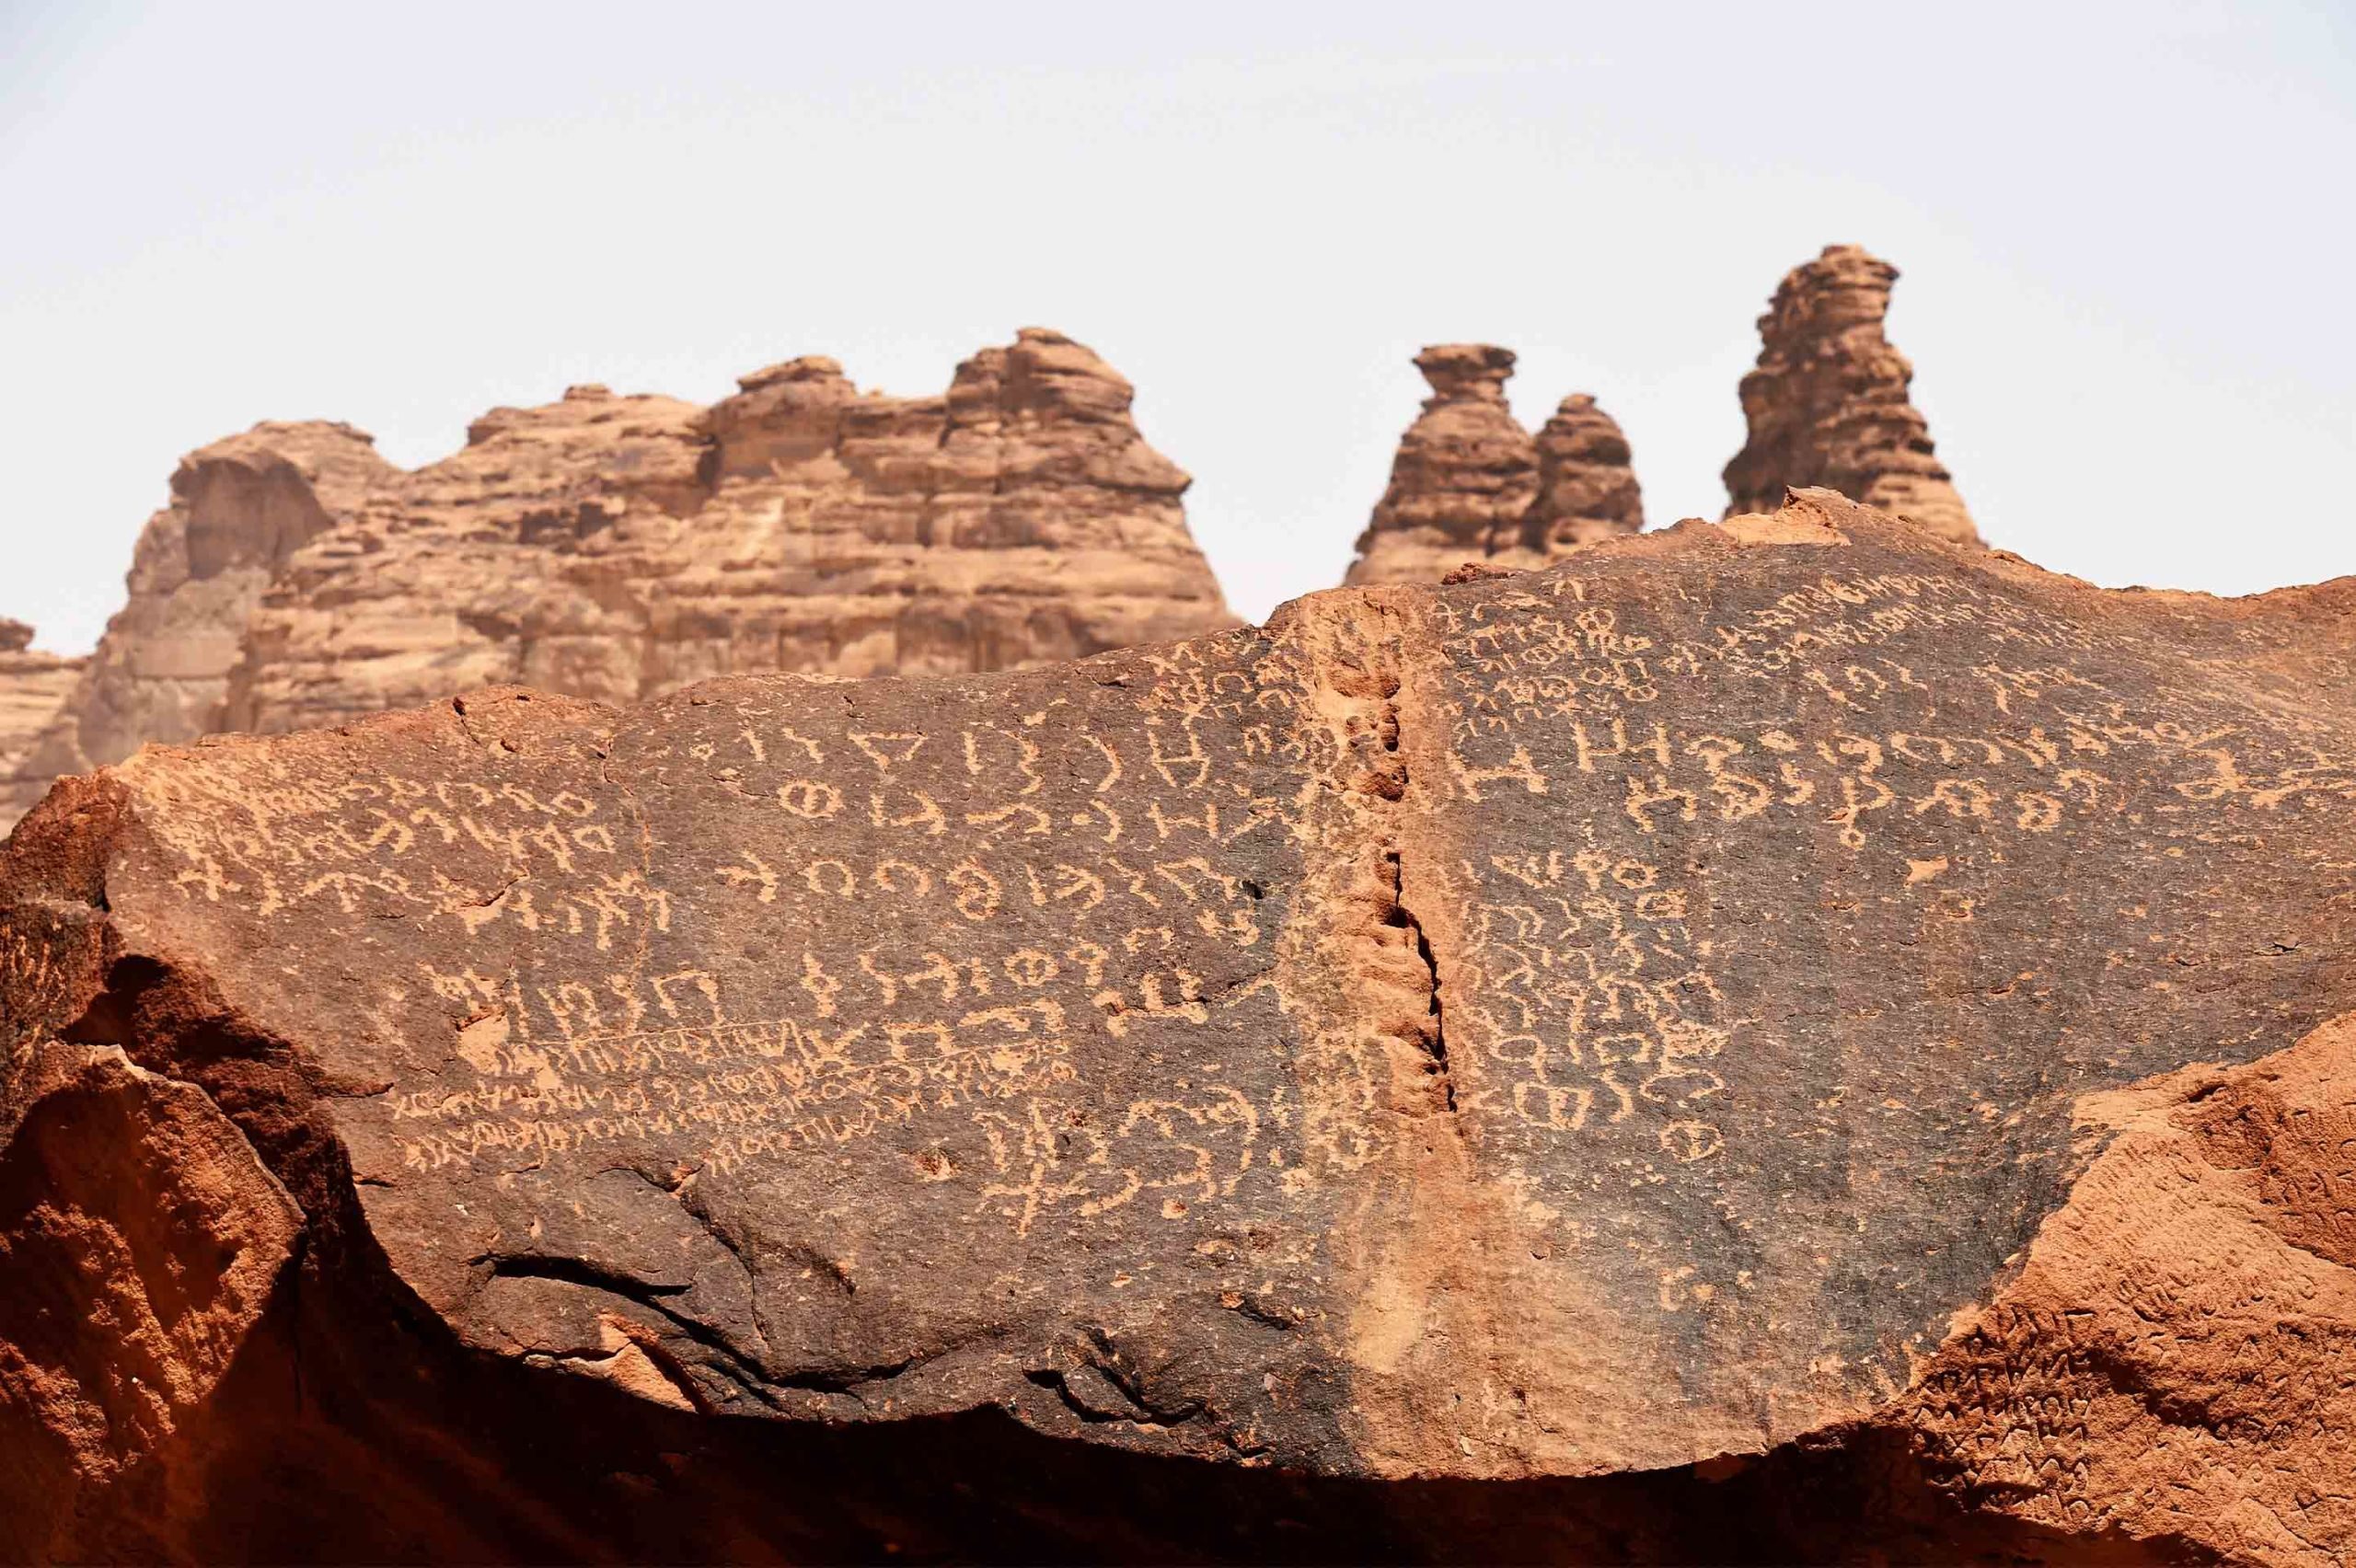 A Nabataean inscription in AlUla in Saudi Arabia.